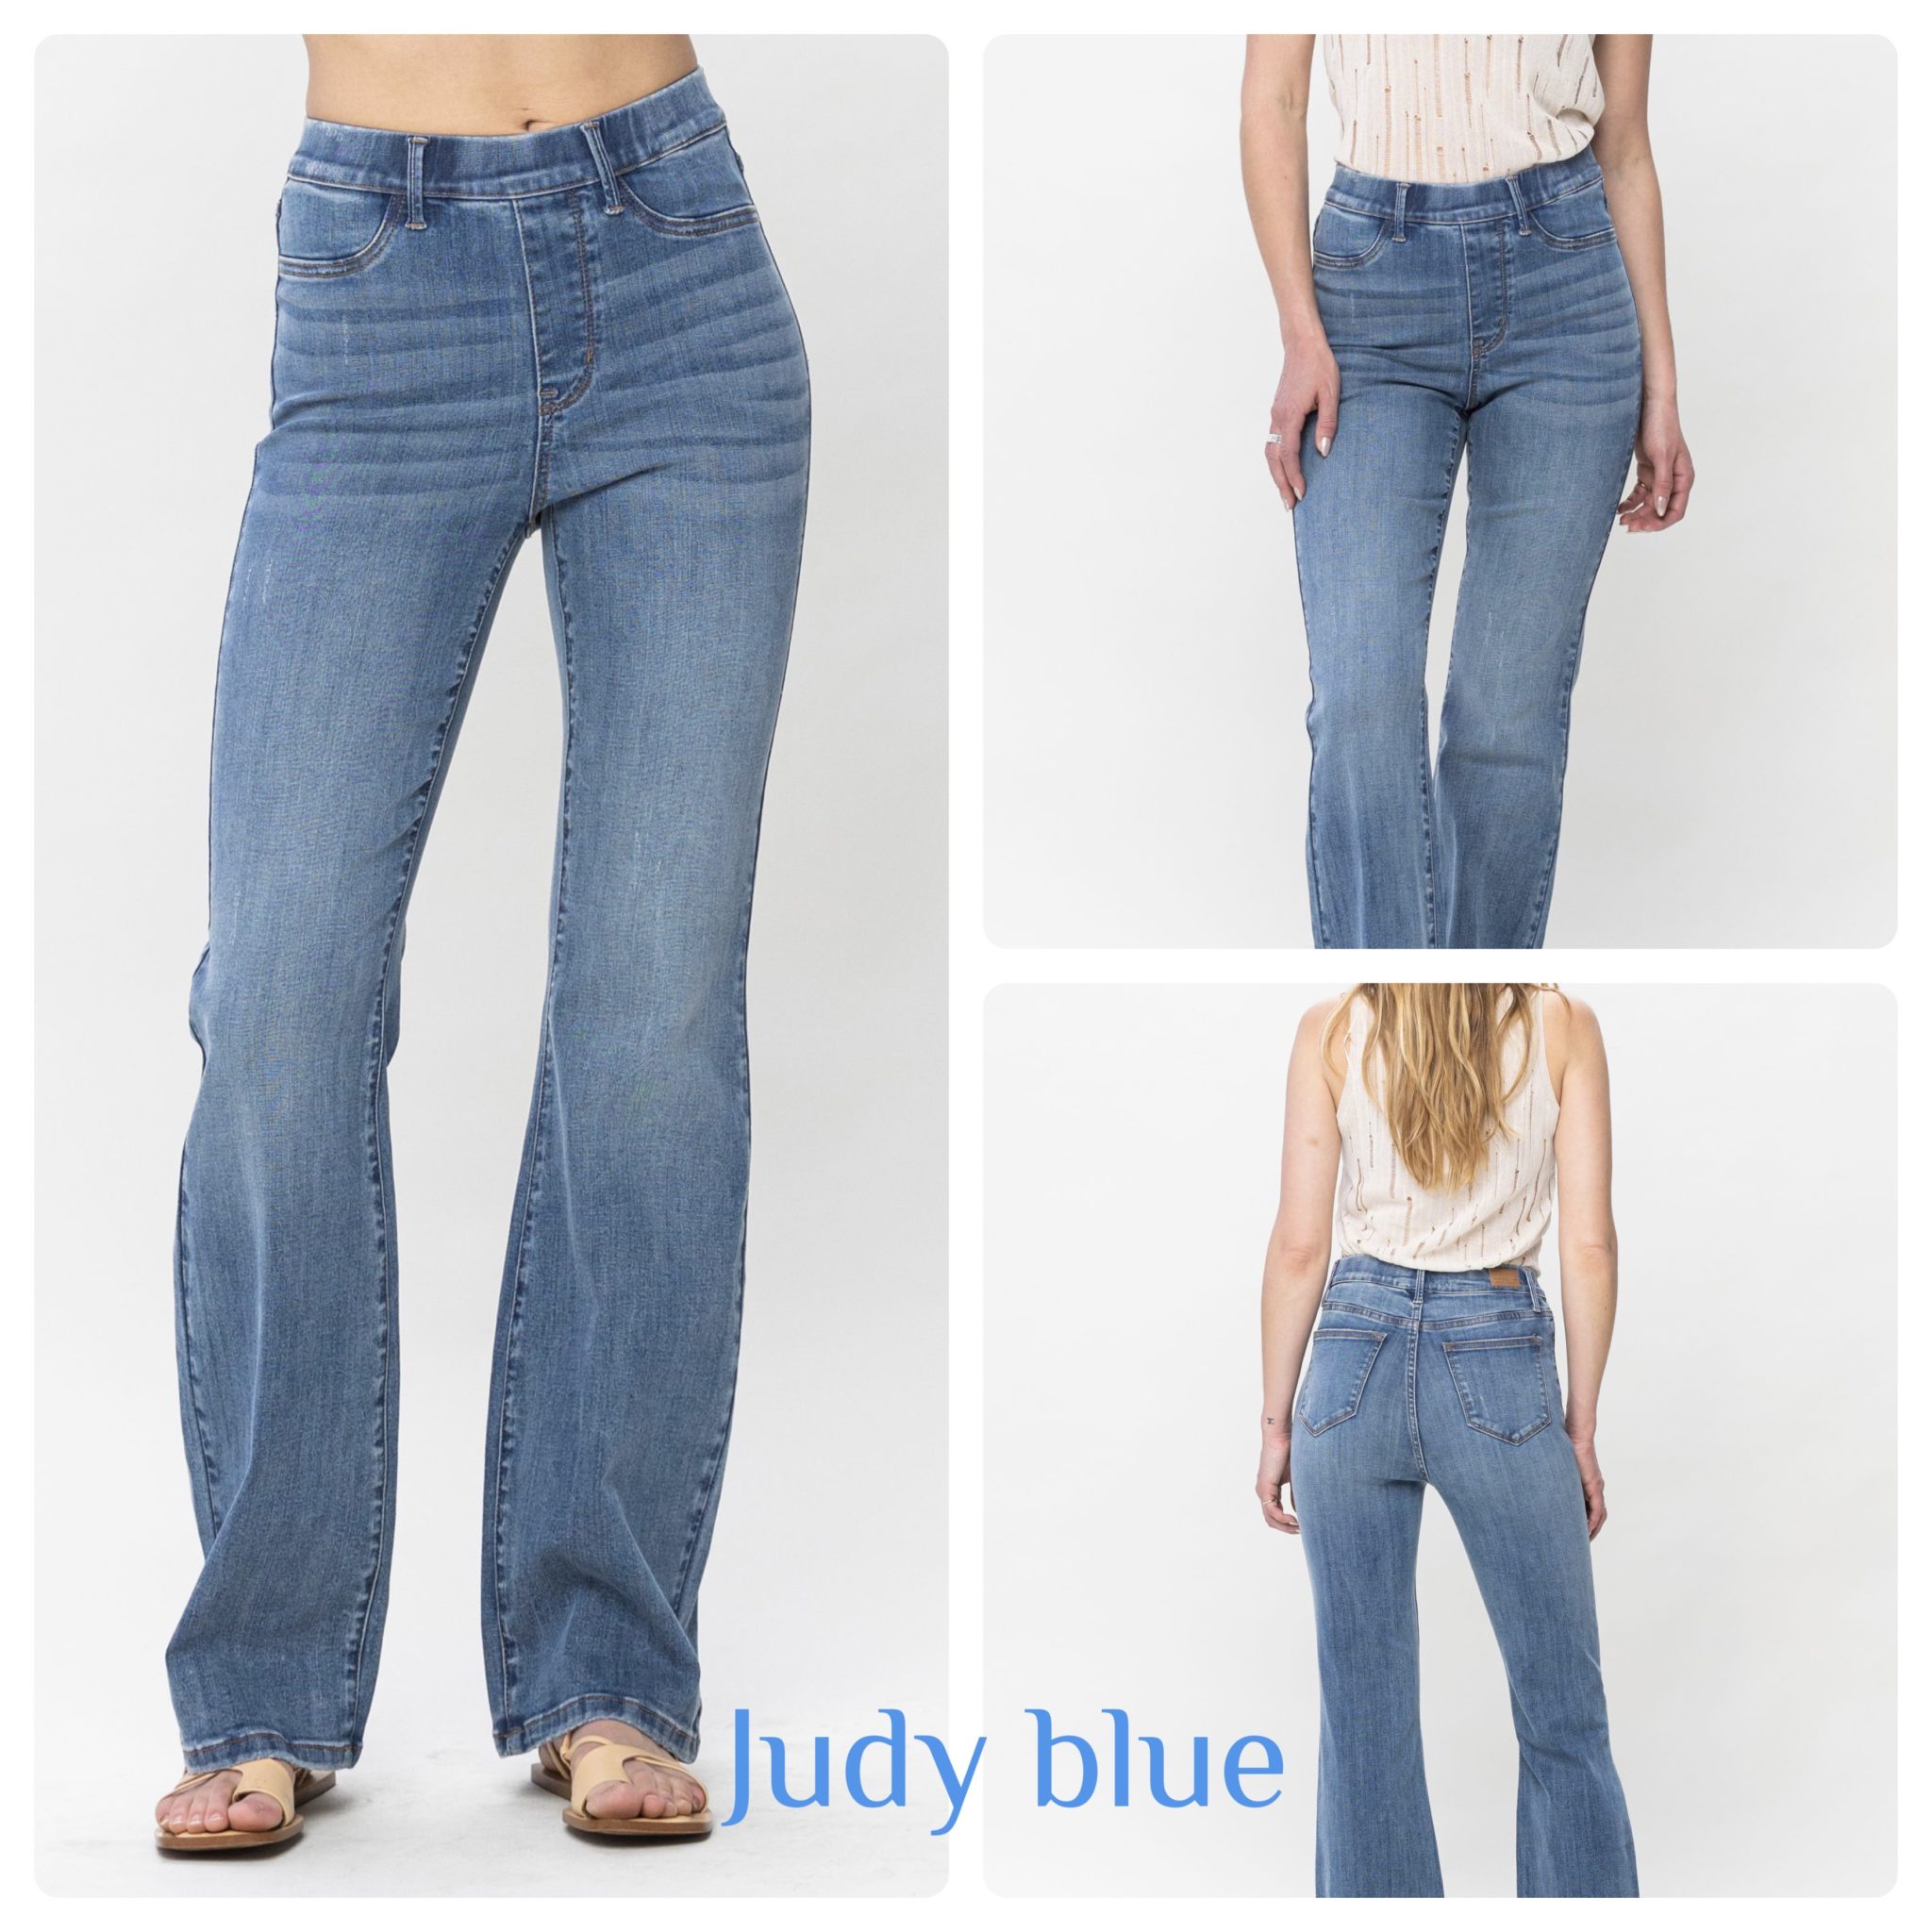 Judy Blue jeans